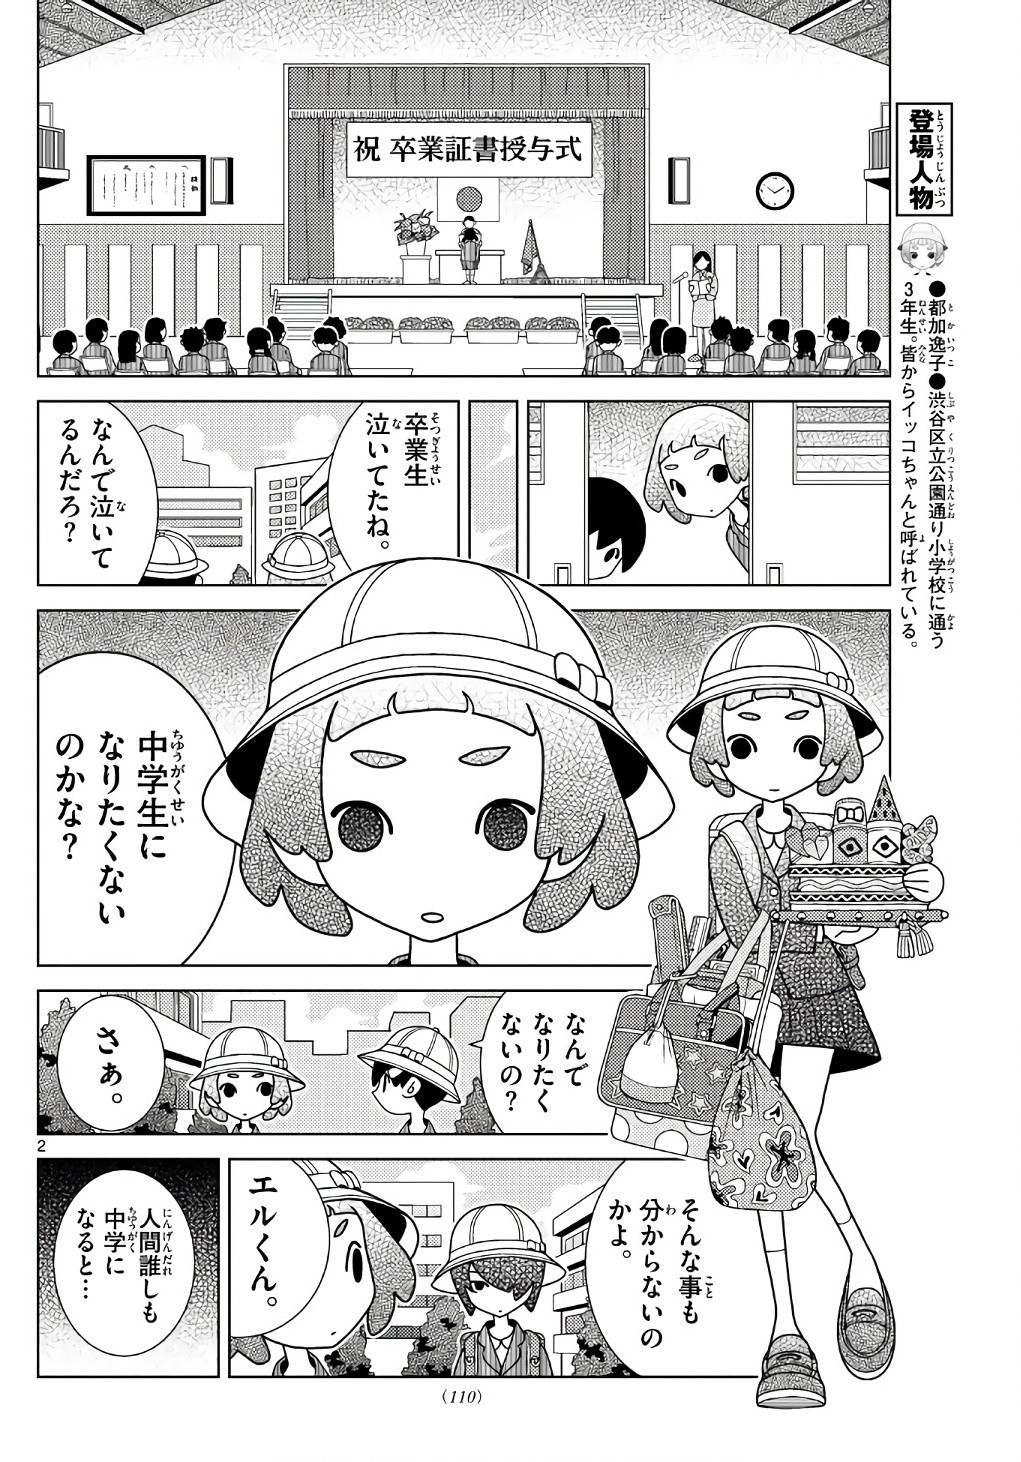 Shibuya Near Family - Chapter 089 - Page 2